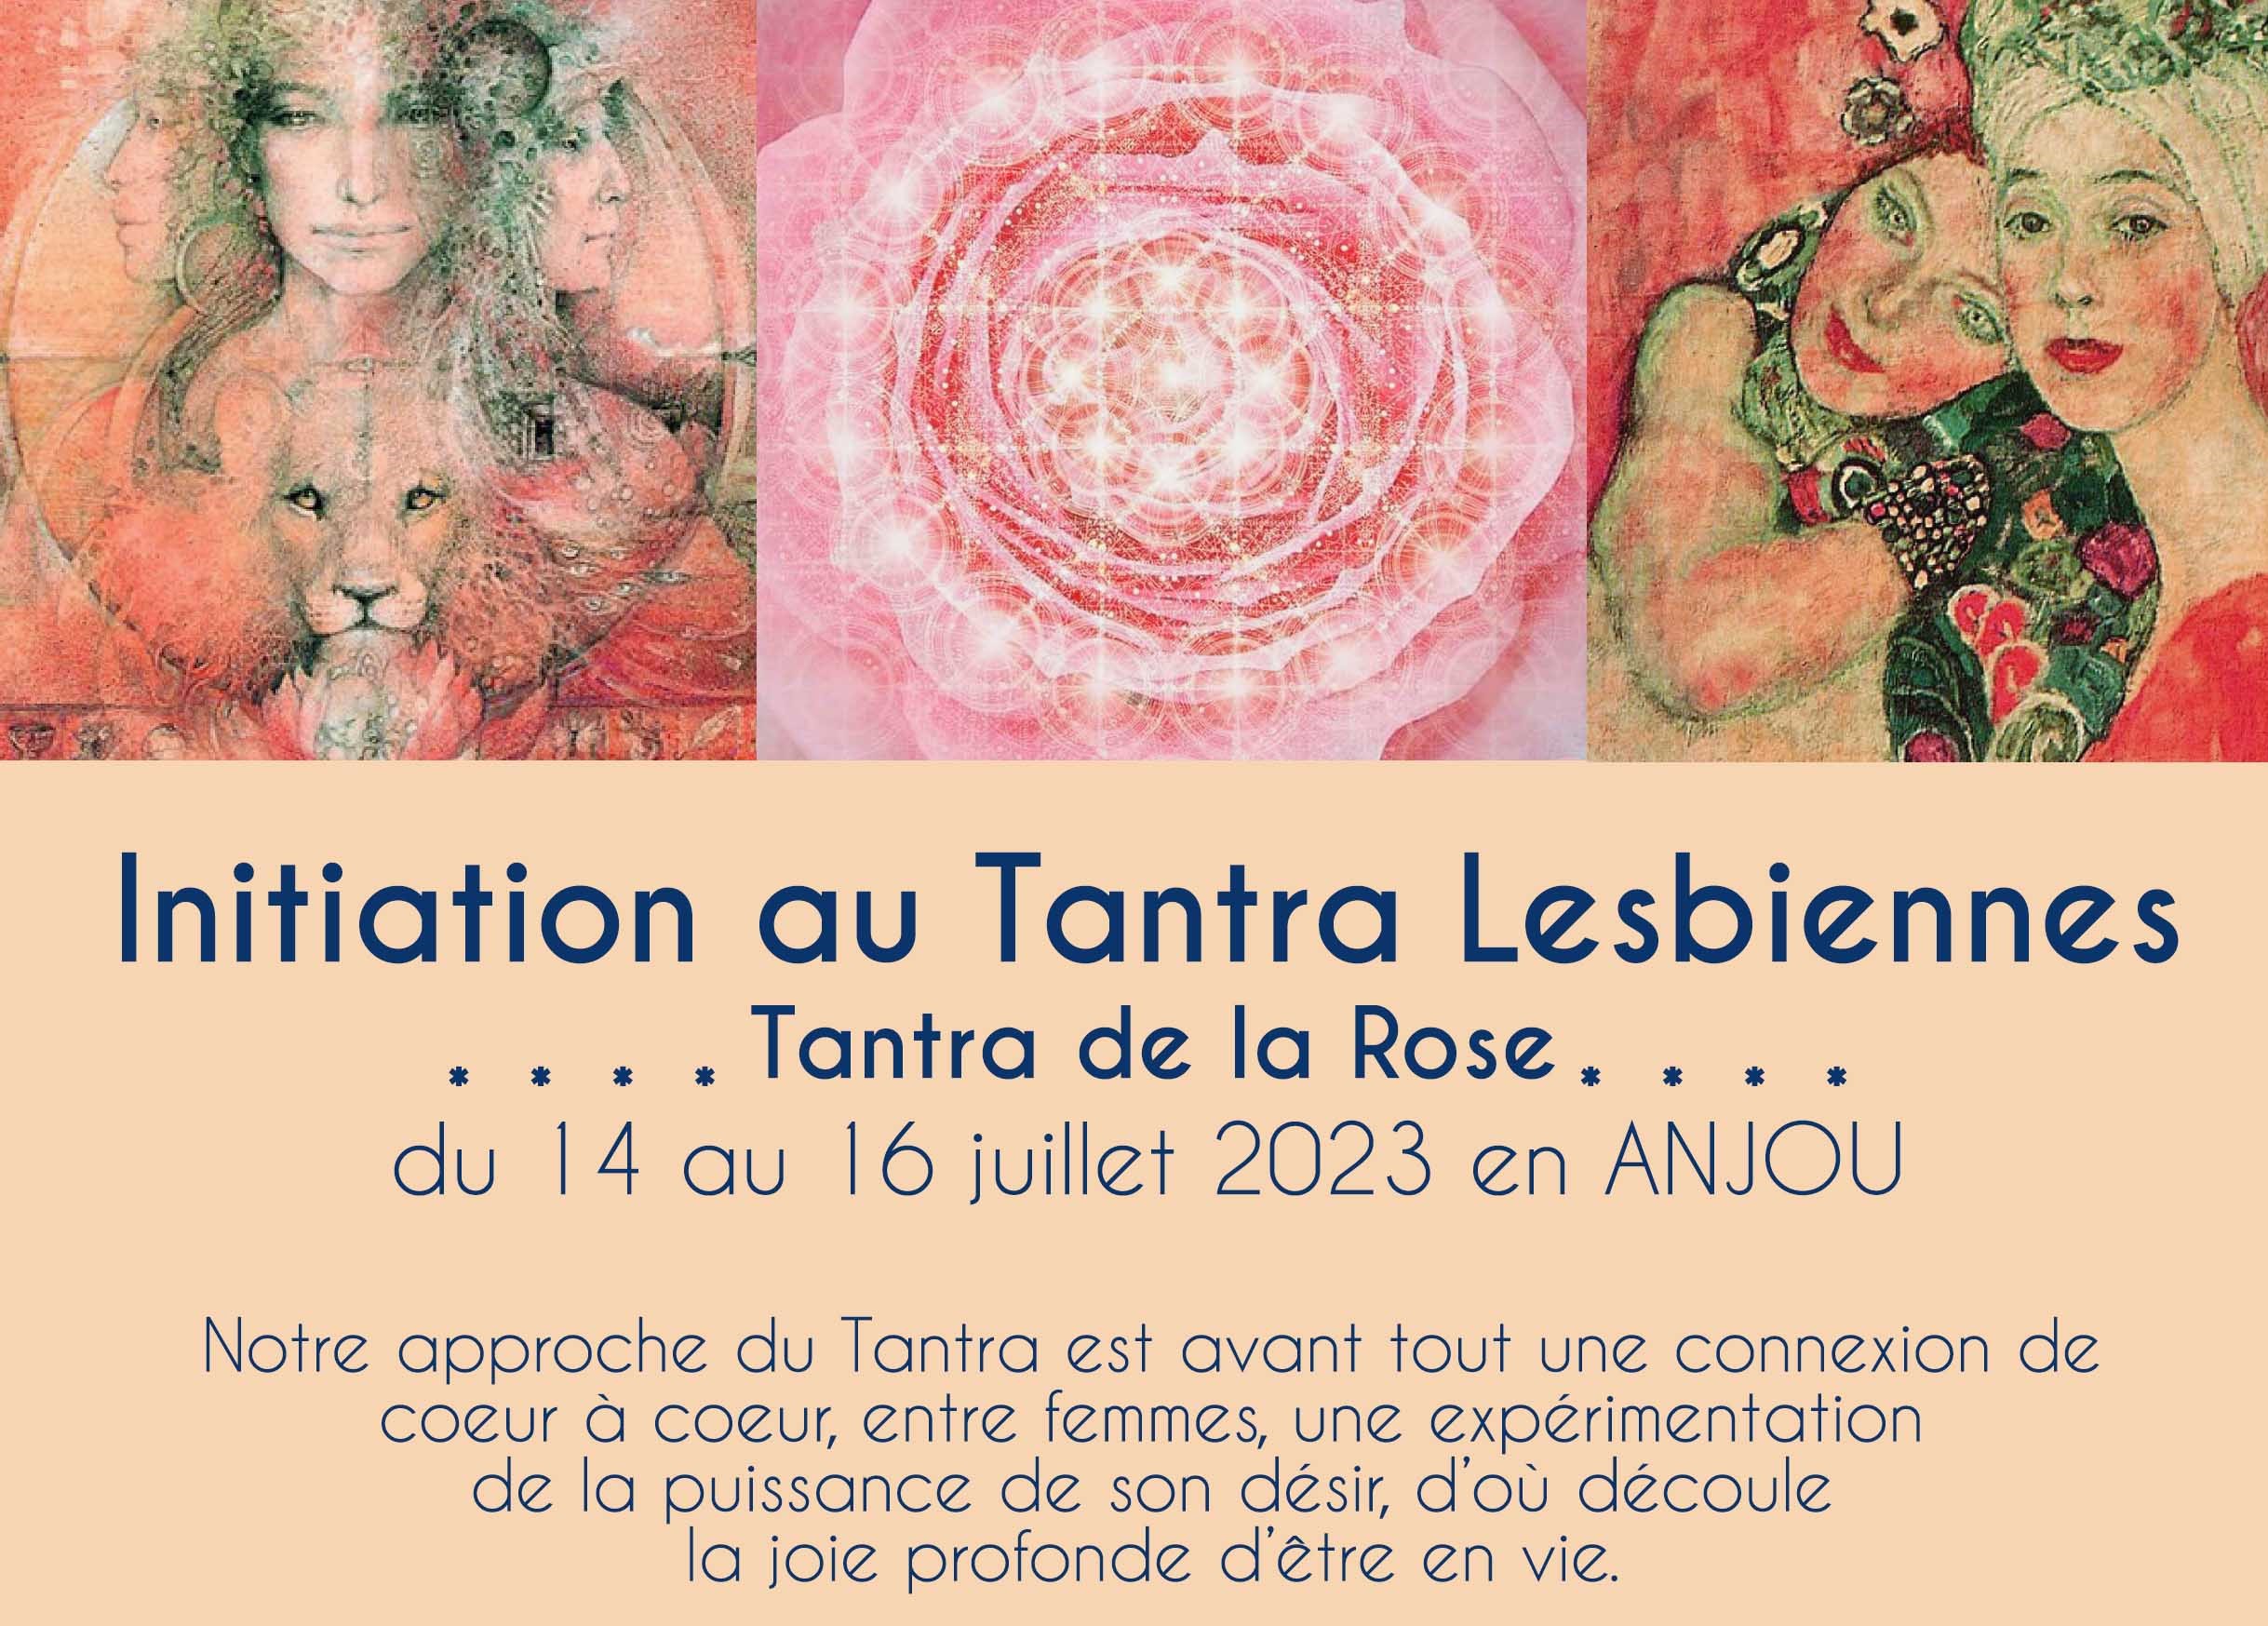 Initiation Tantra lesbien avec Mireille et Fabienne,  14-16 juillet 2023 en Anjou